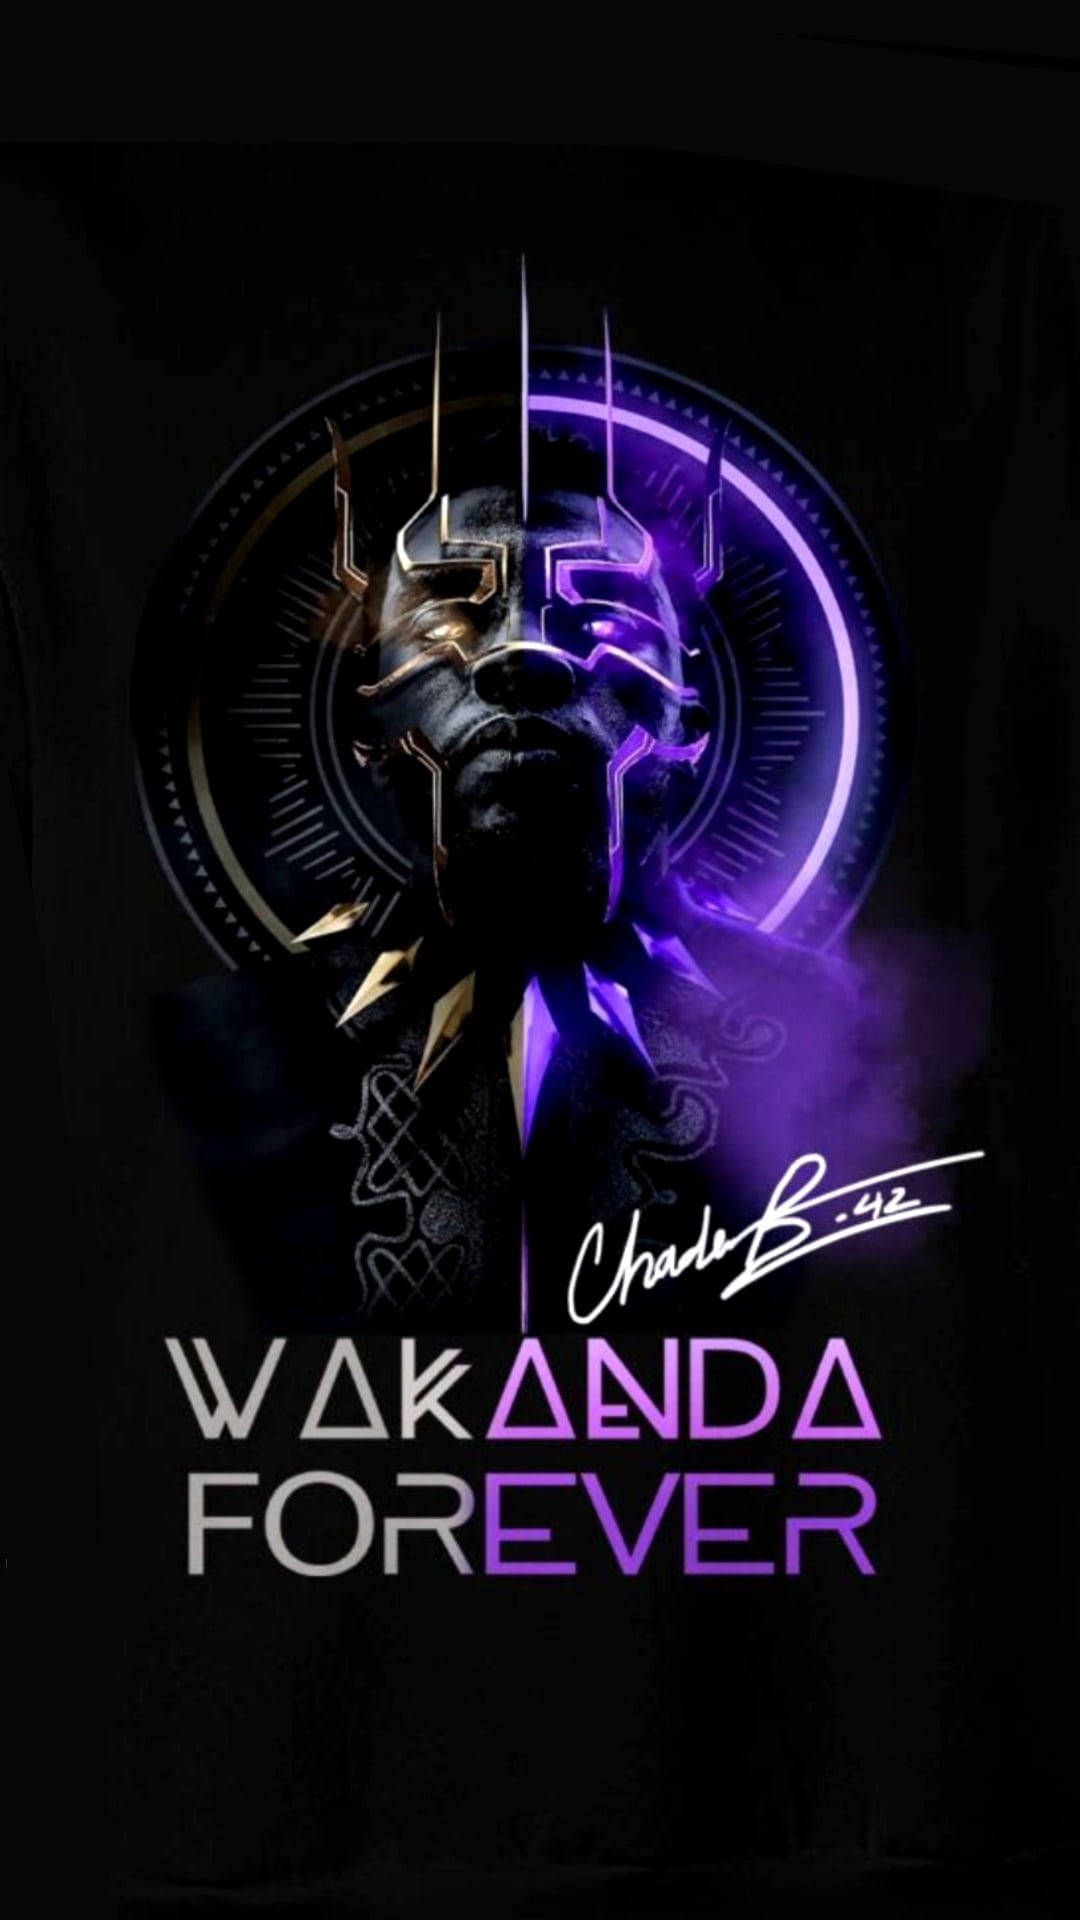 Wakanda Pictures Wallpaper